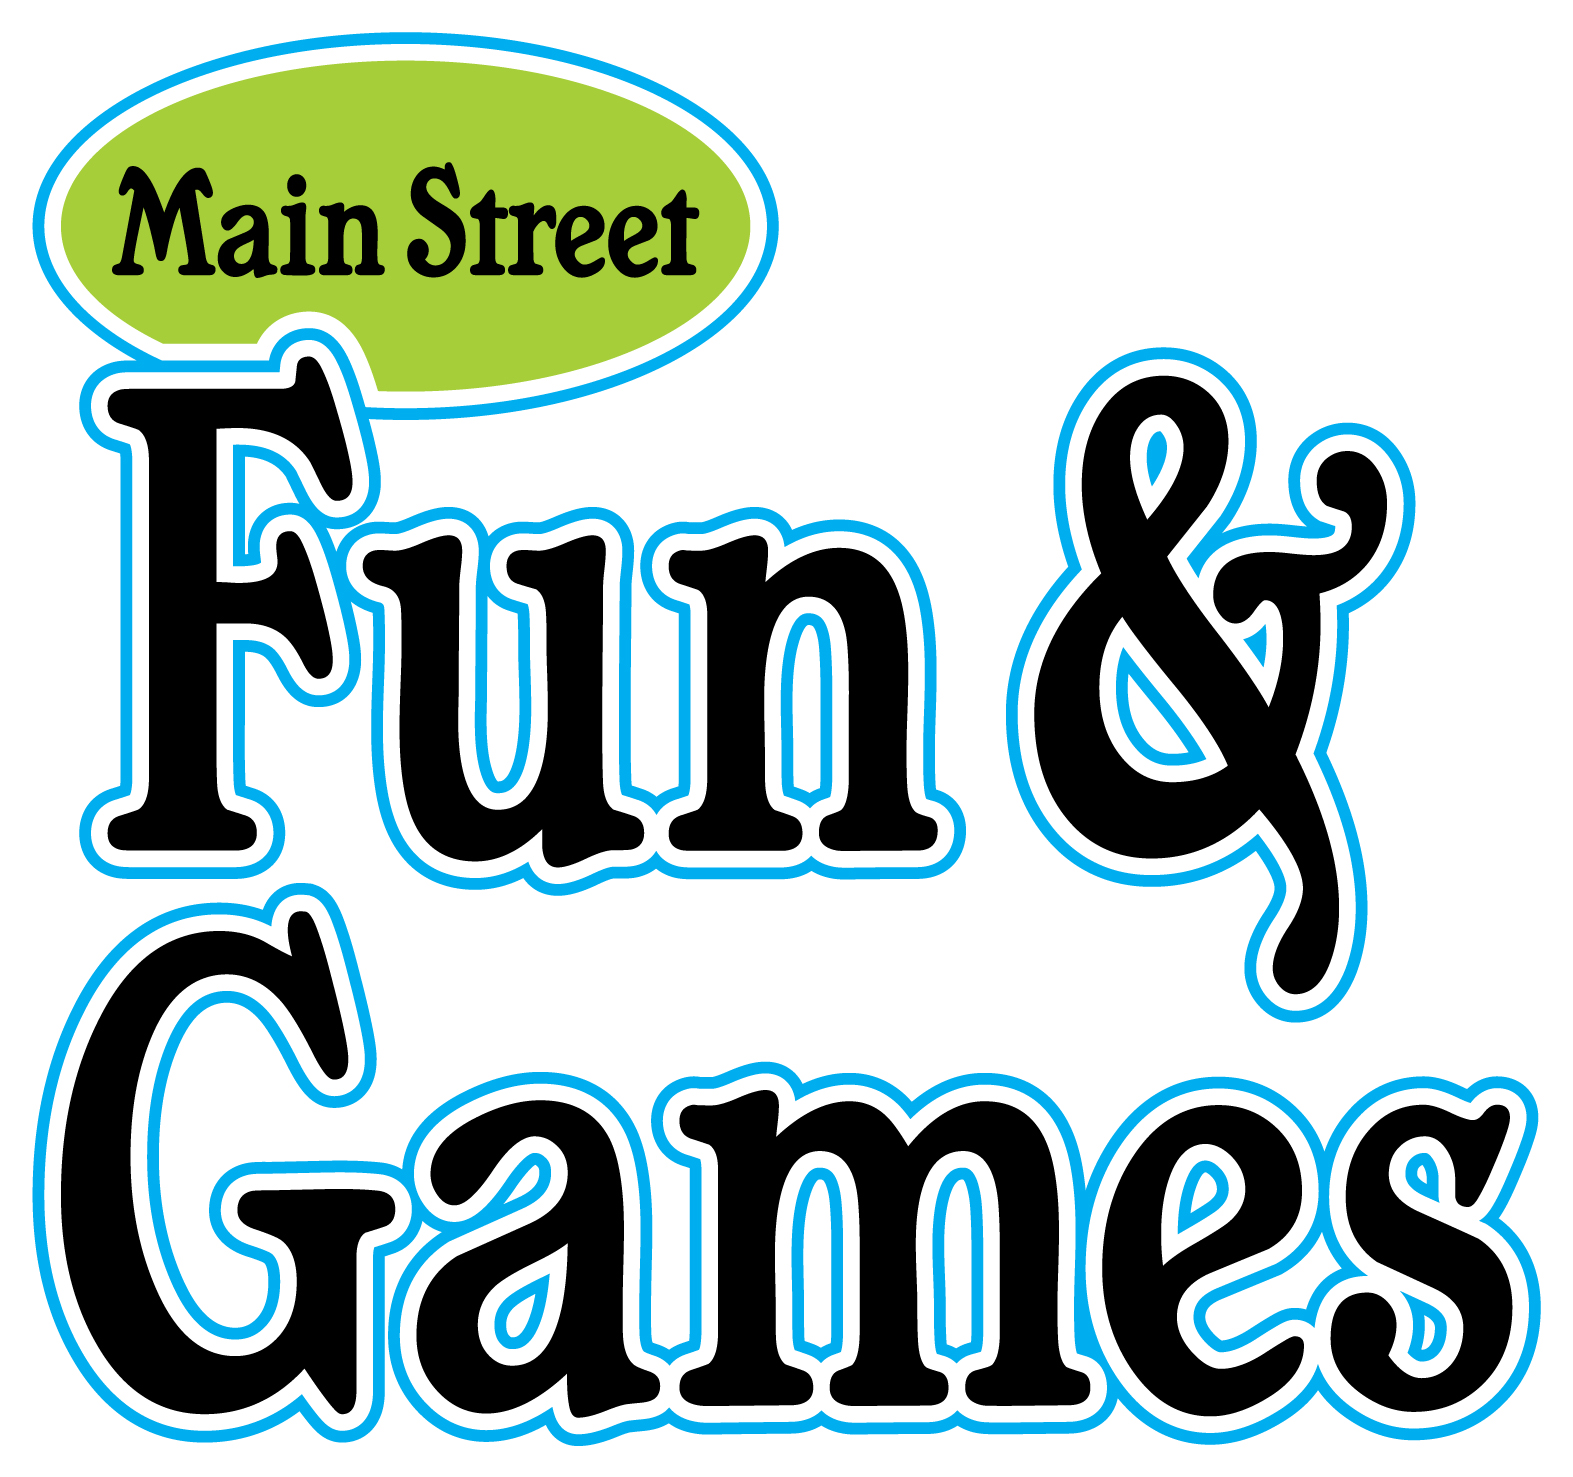 Main Street Fun & Games